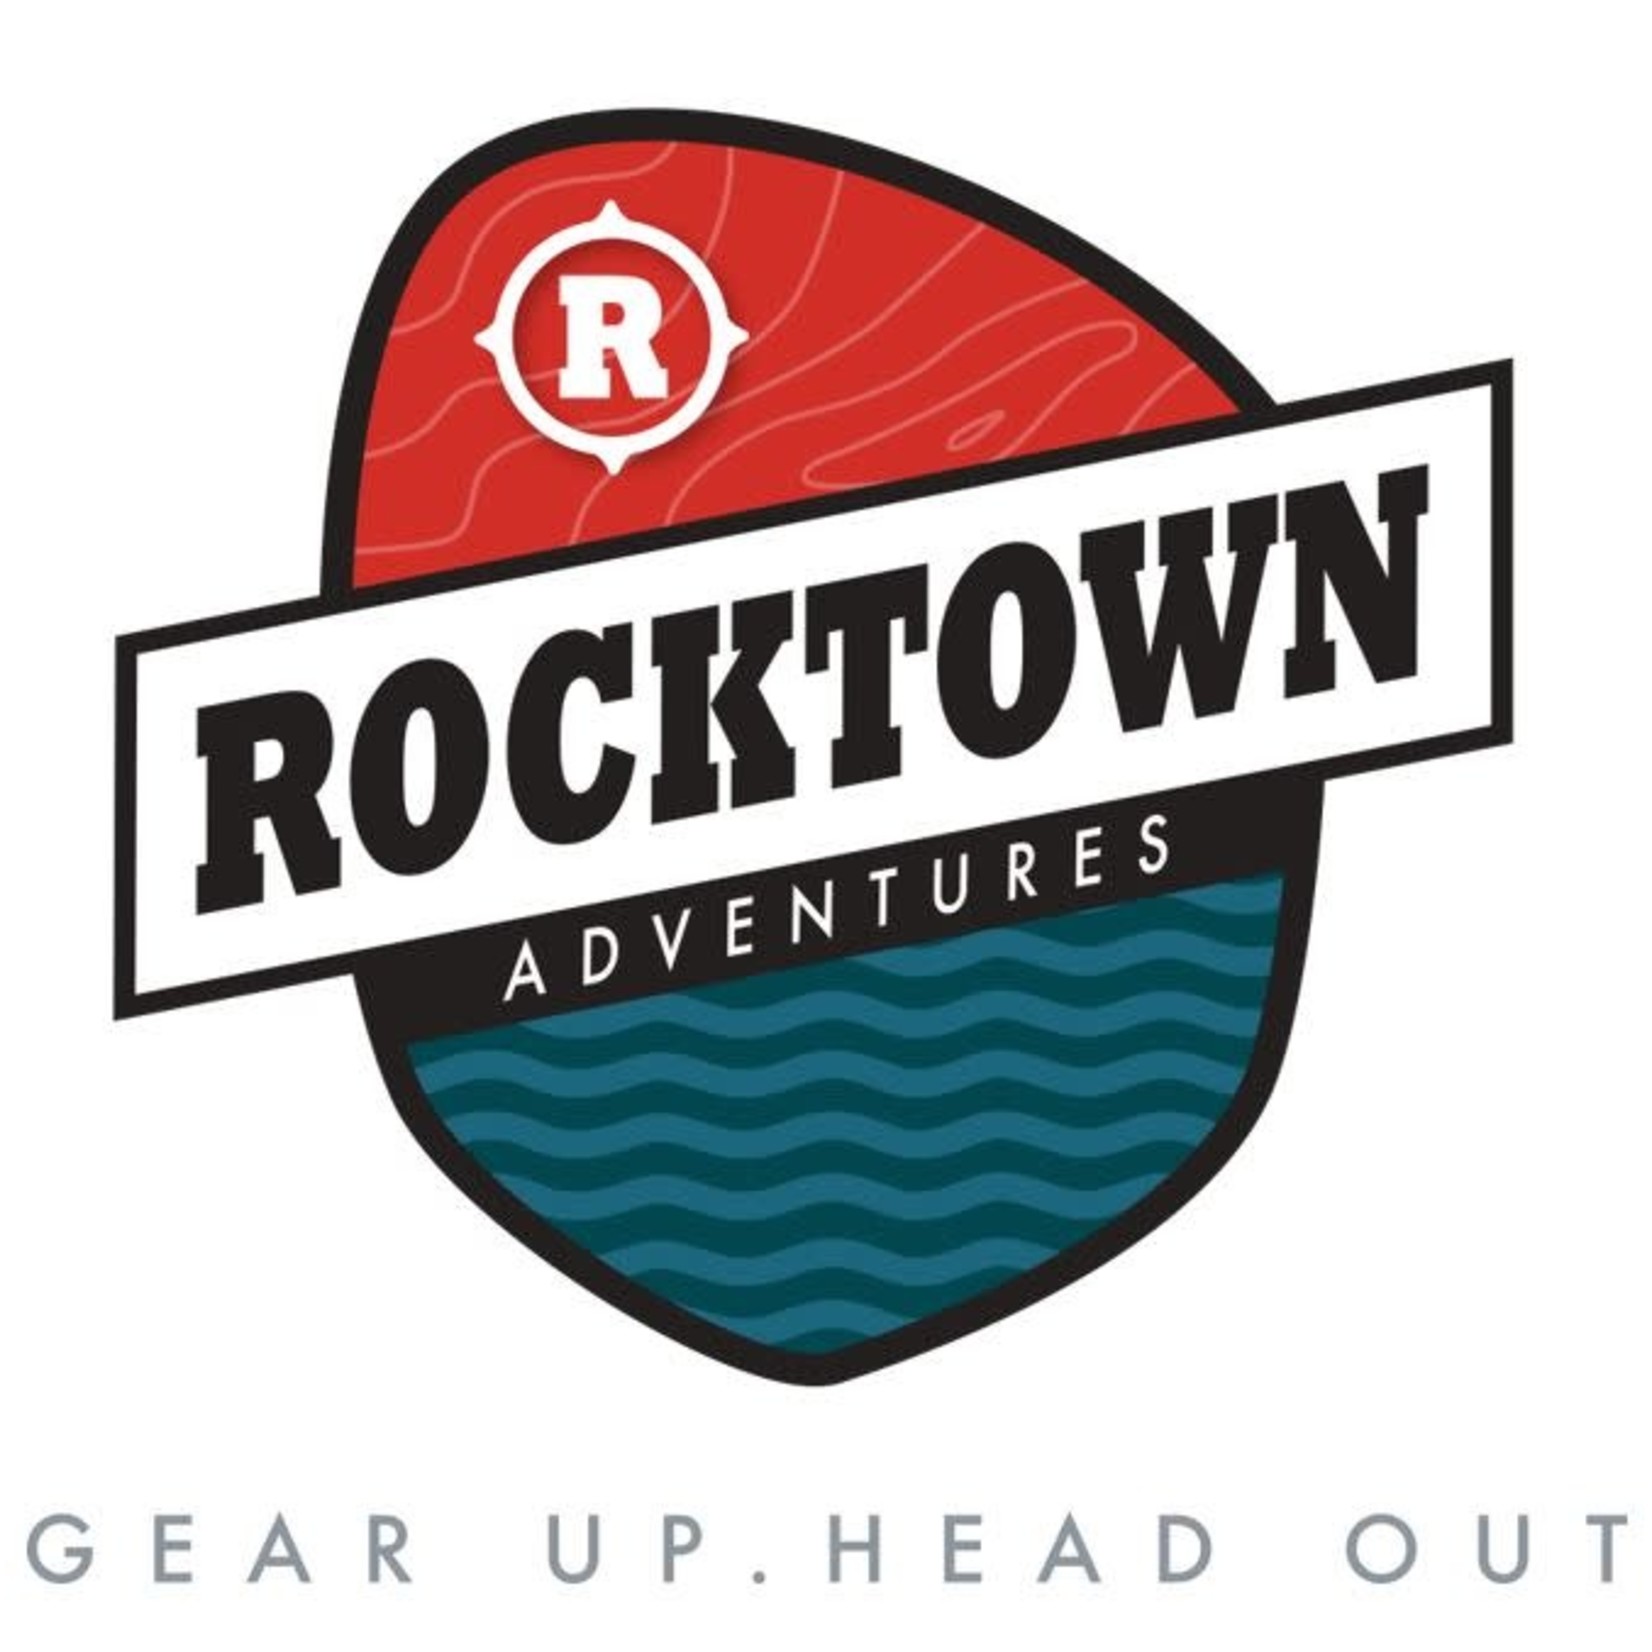 Rocktown Adventures-Rockford Rocktown Adventures-Rockford $20.00 1-Hour Paddlesport Rental